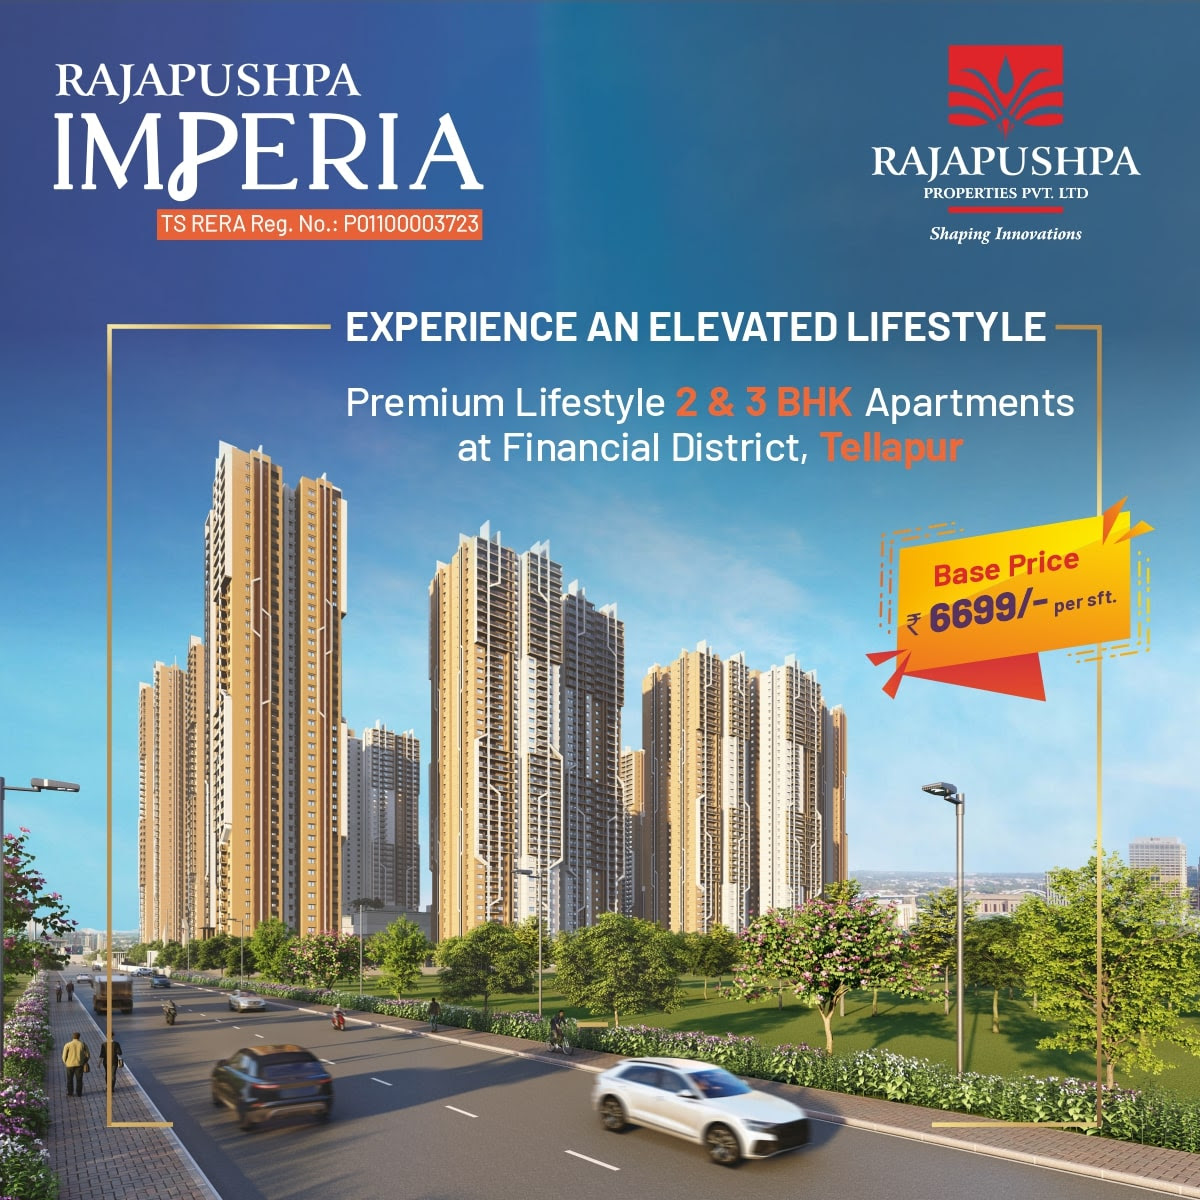 Premium lifestyle 2 & 3 BHK apartments base price Rs 6699 per sqft at Rajapushpa Imperia, Hyderabad Update